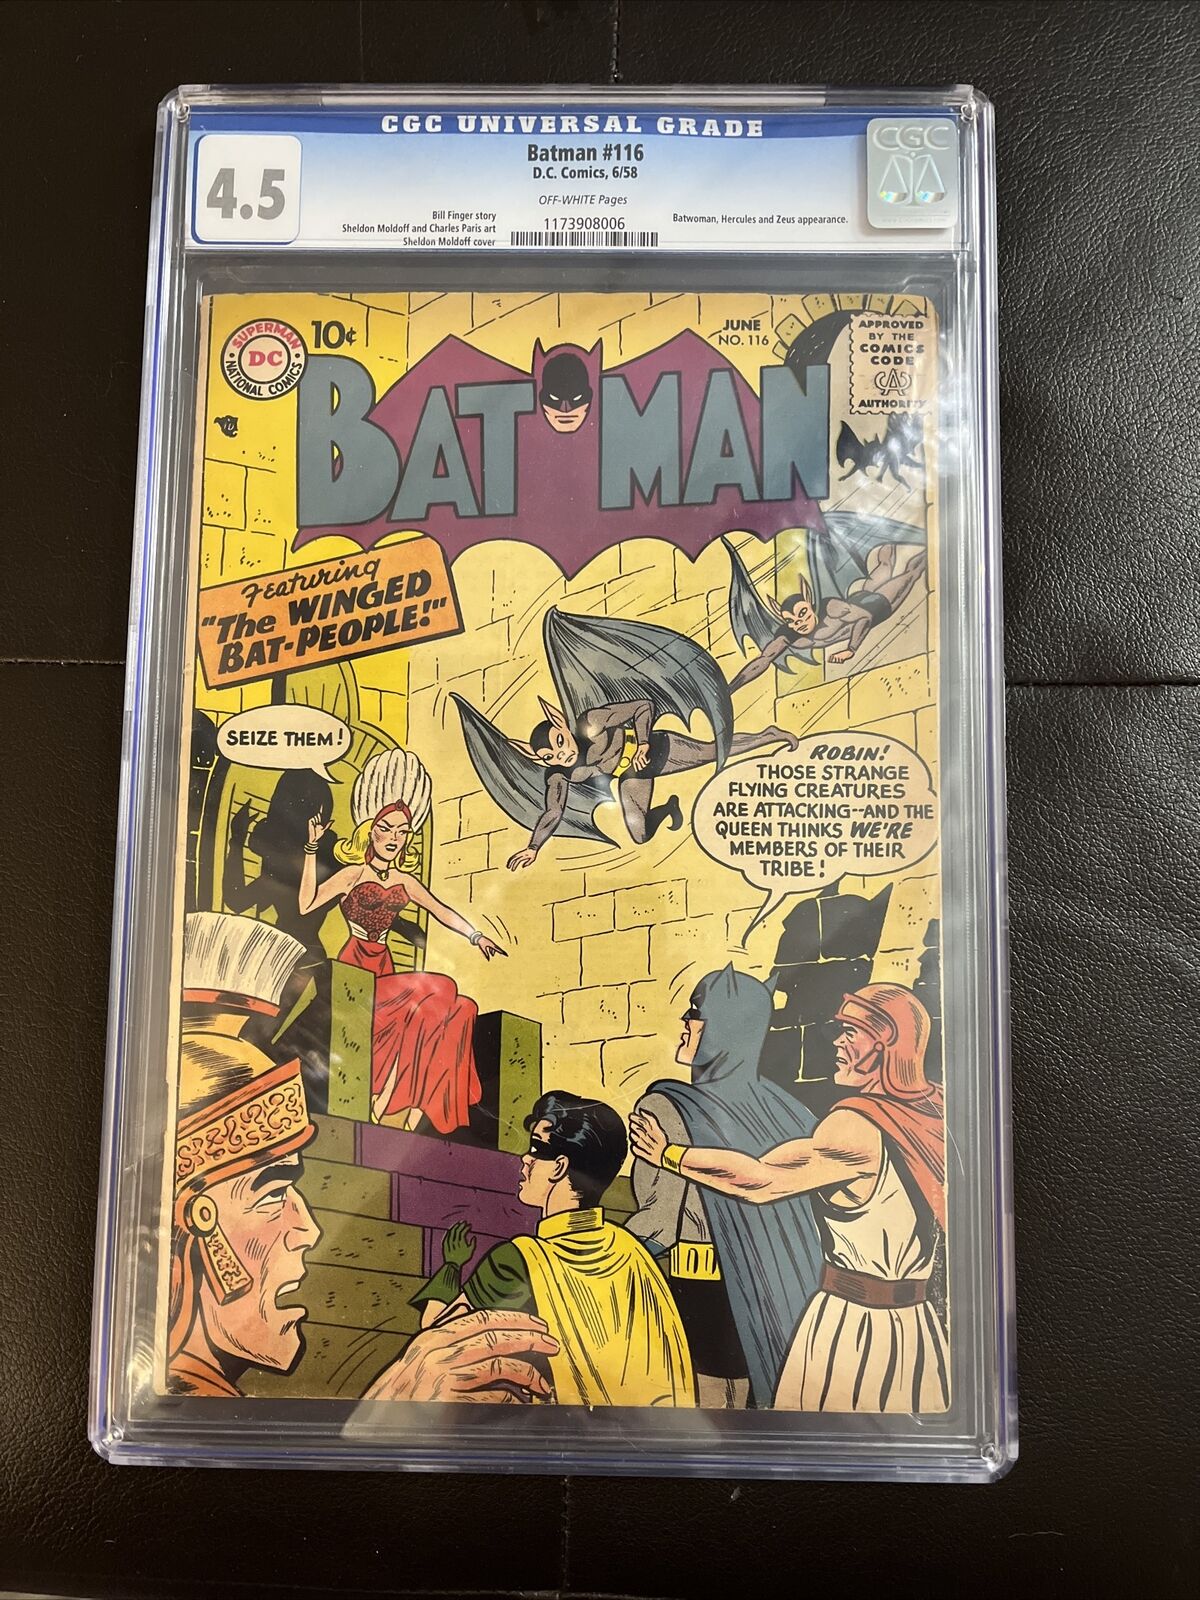 BATMAN #116 CGC 4.5 June 1958 Silver Age “The Winged Bat-People